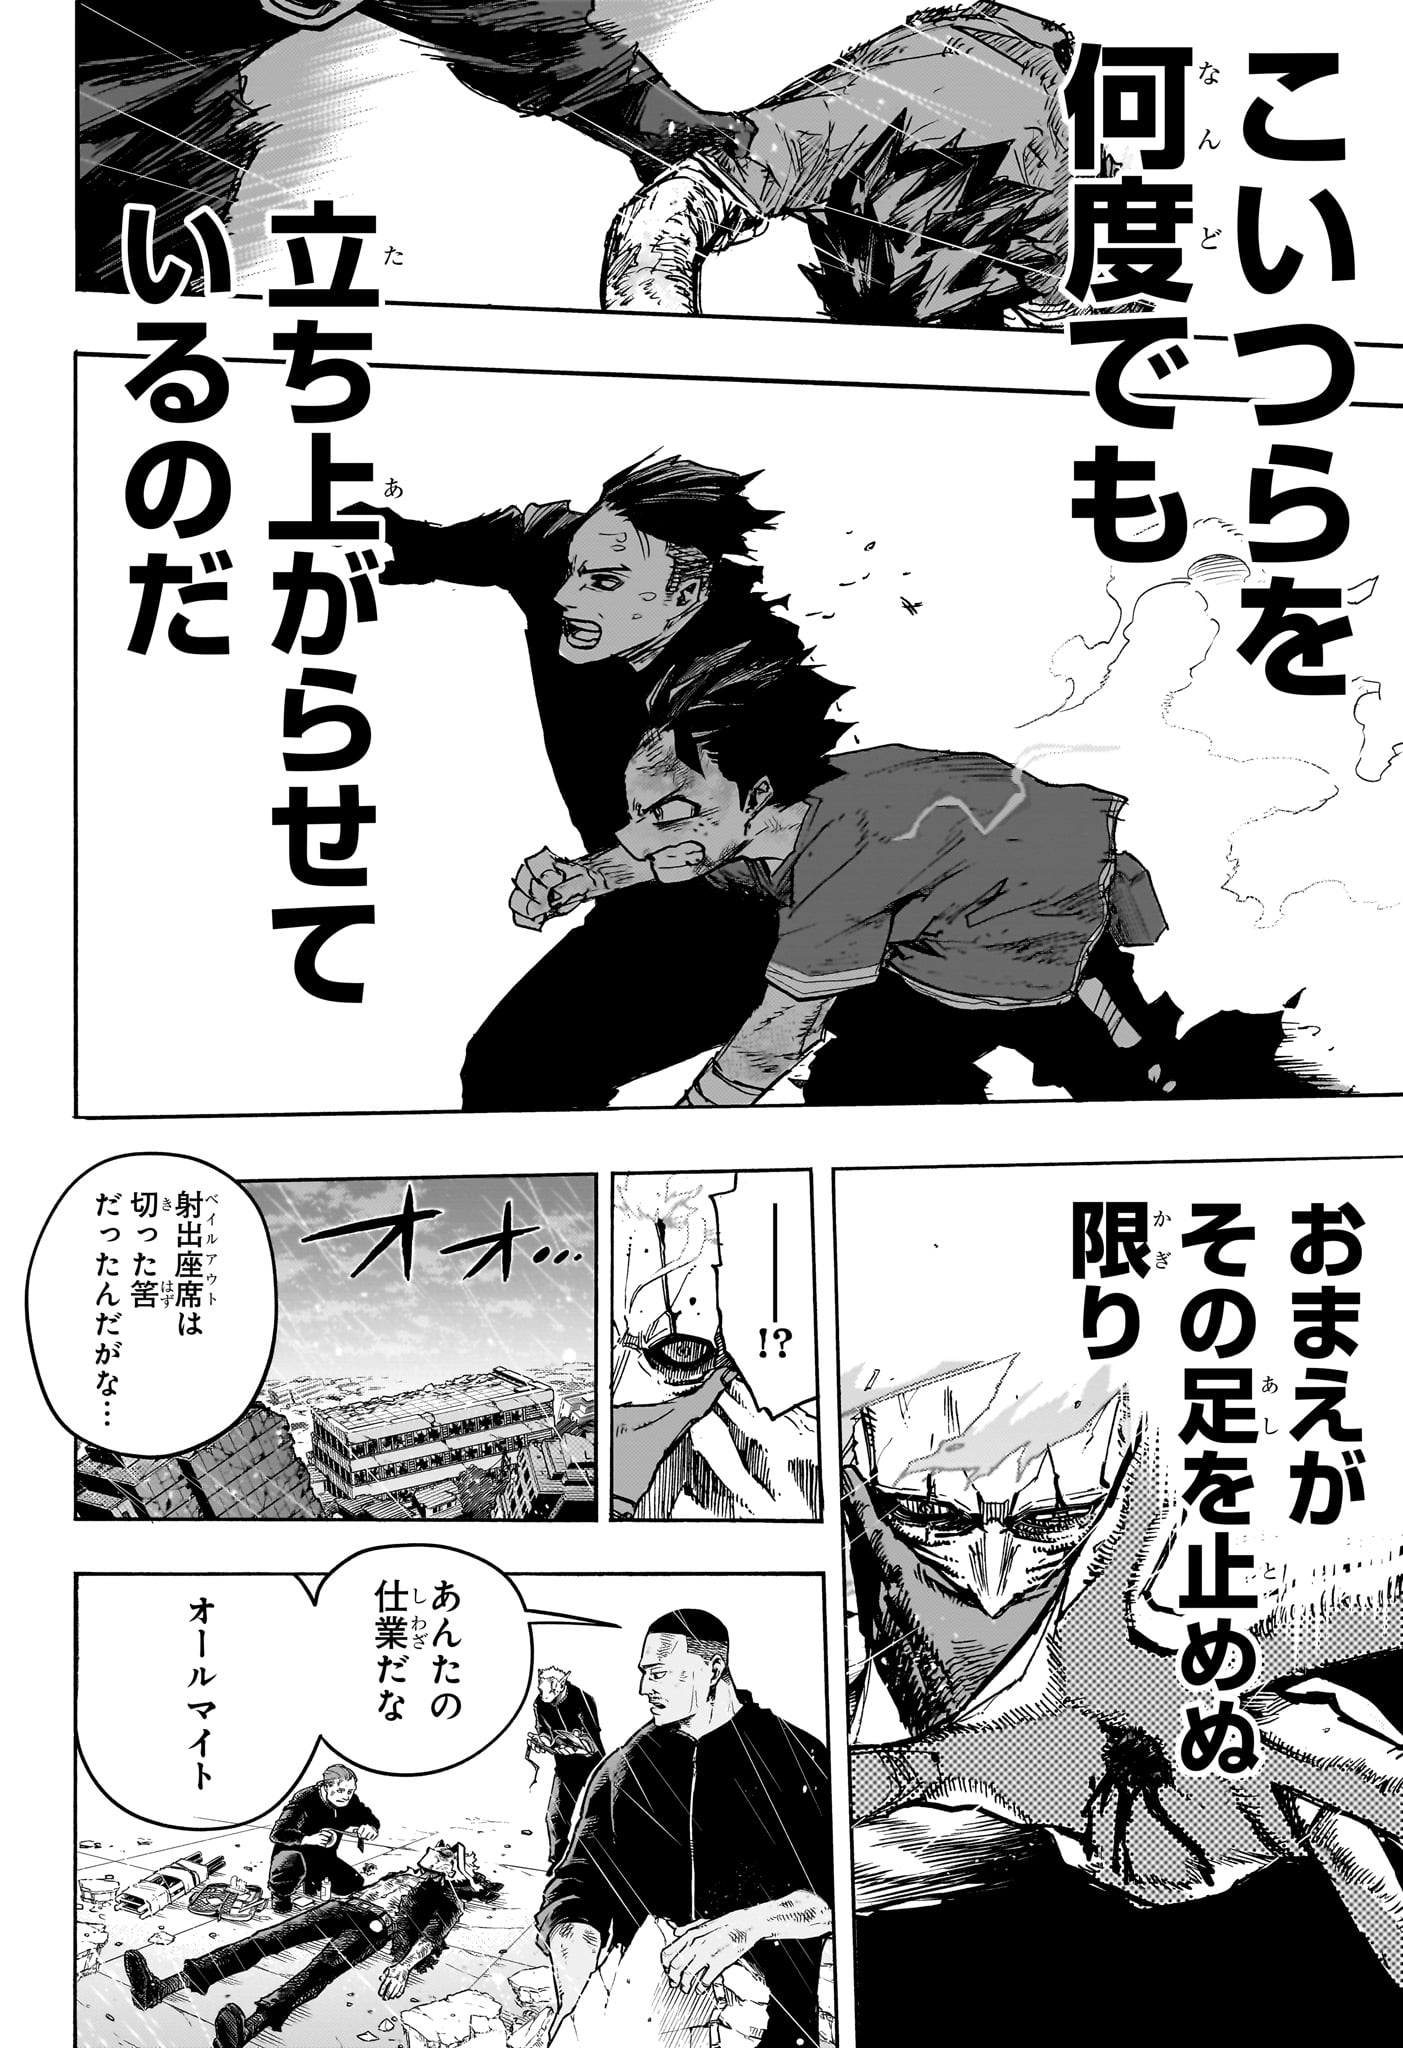 Boku no Hero Academia - Chapter 422 - Page 10